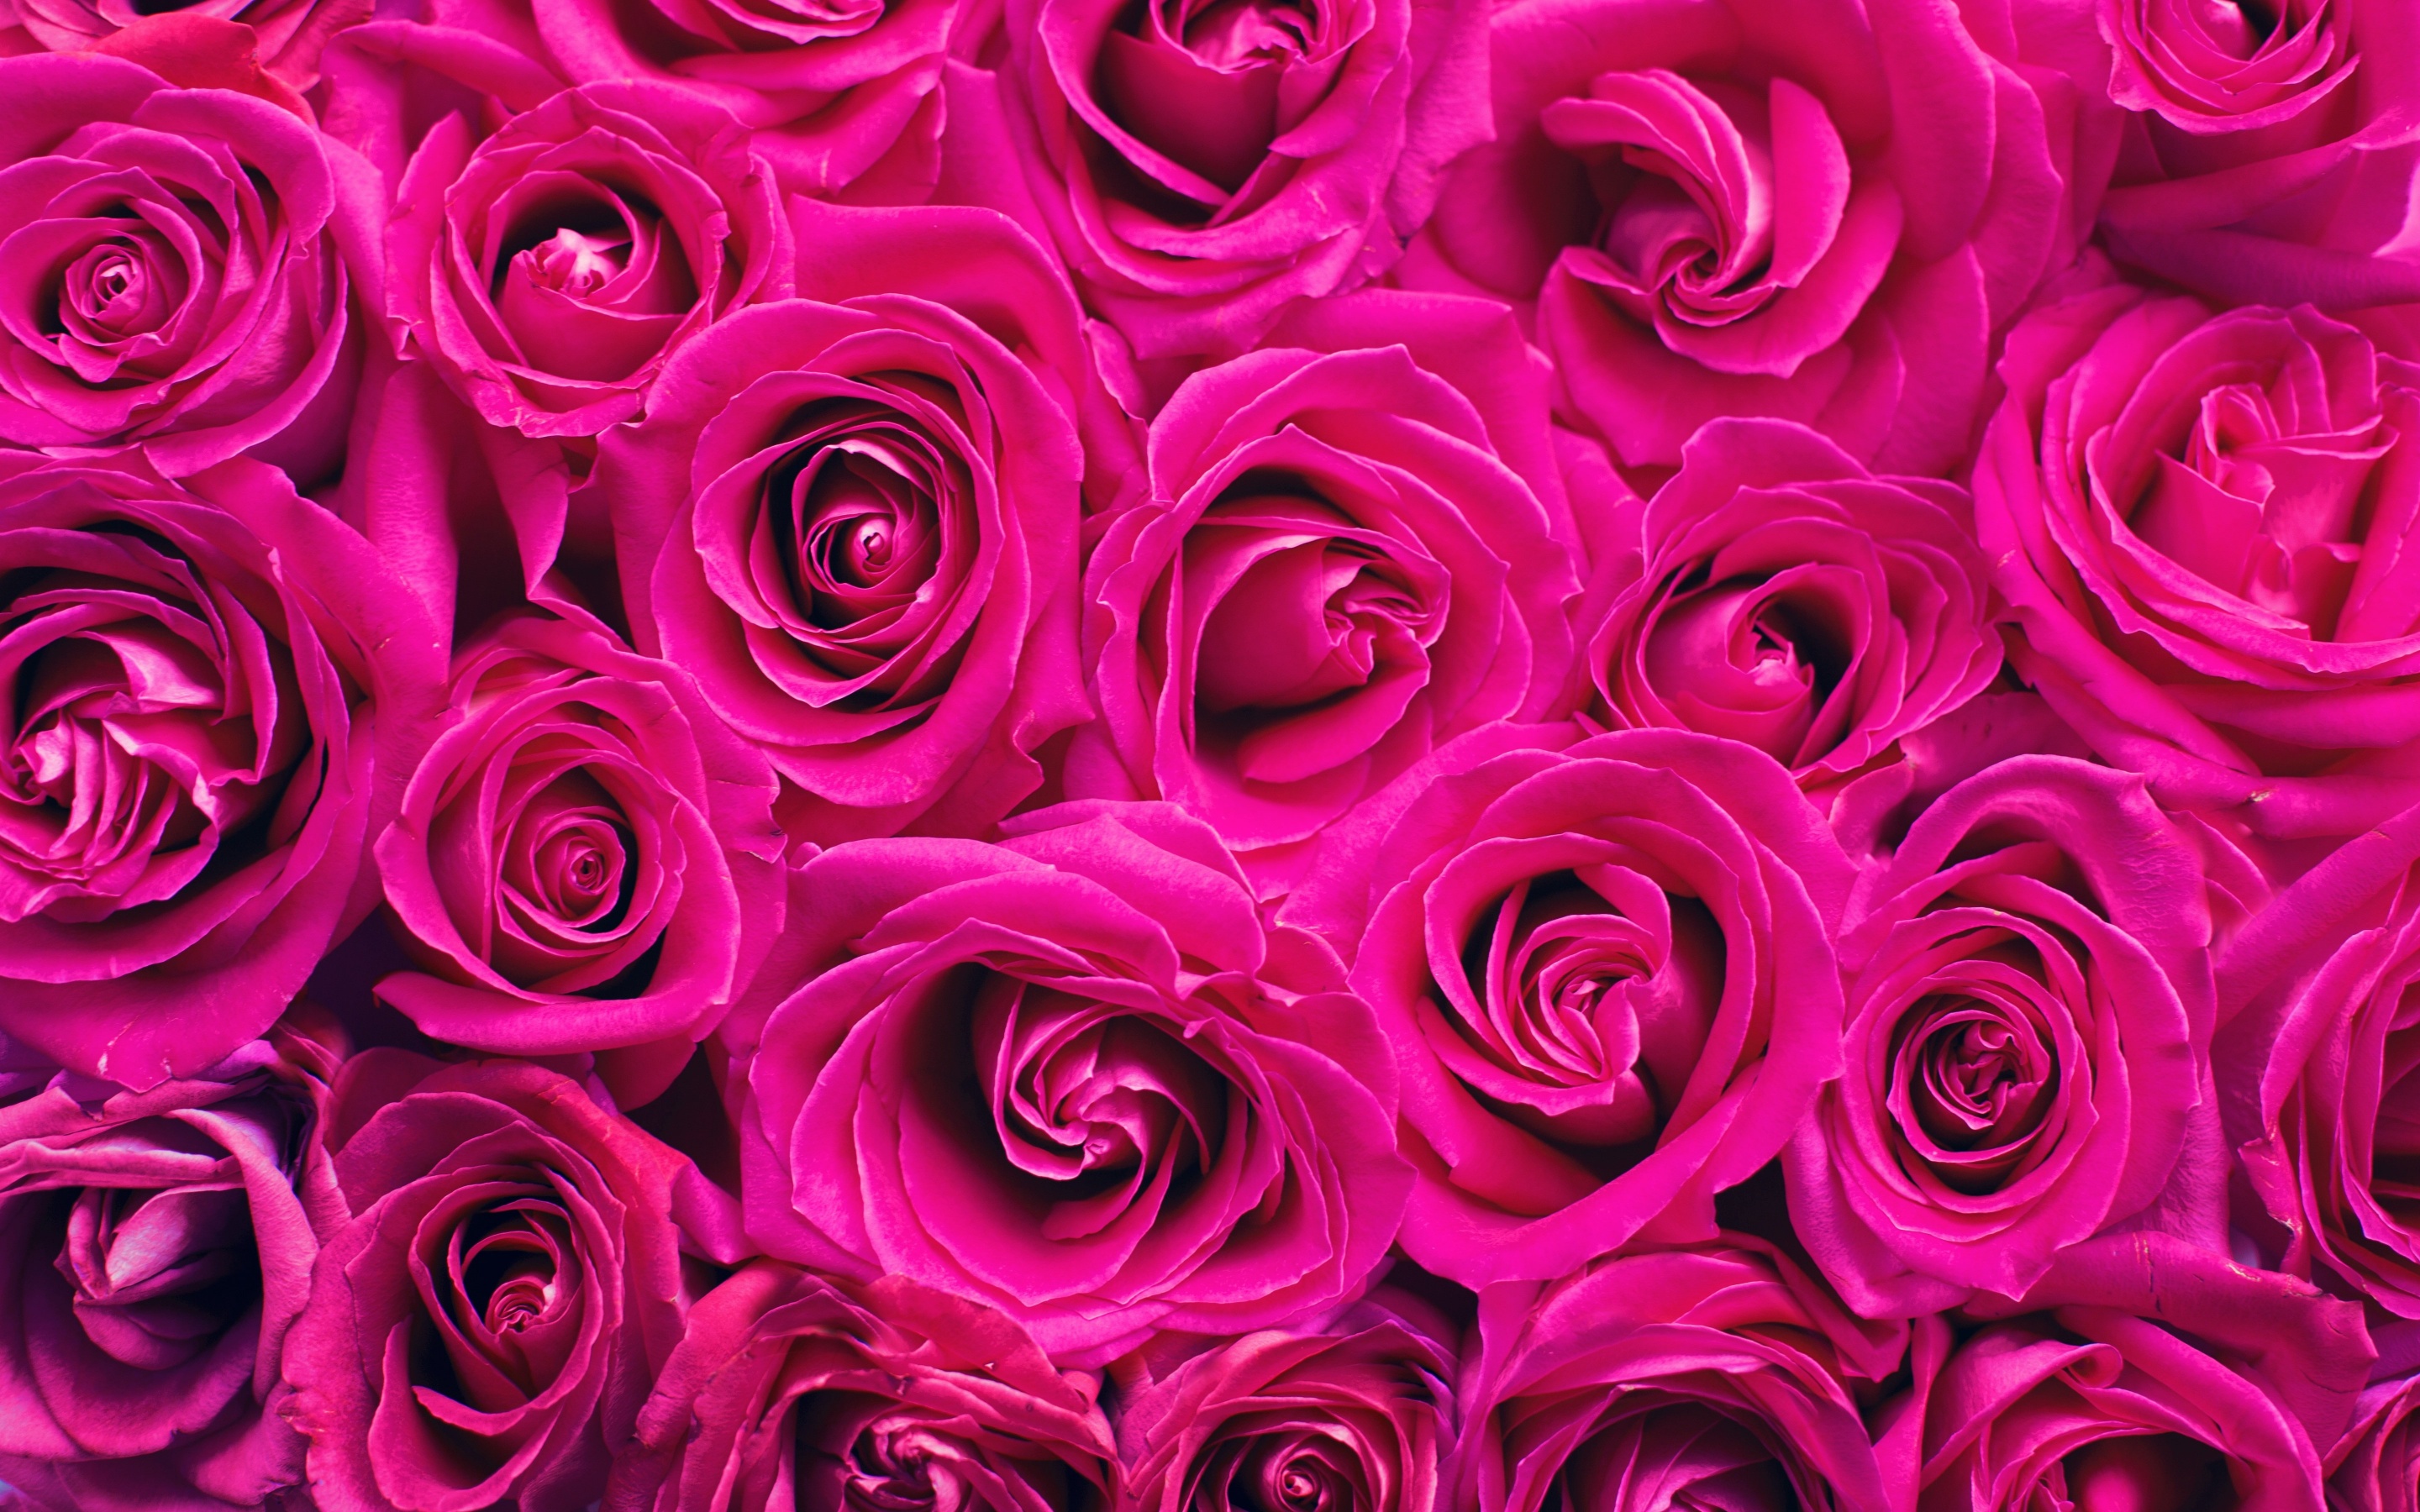 Pink rose flowers photo  Free Flower Image on Unsplash